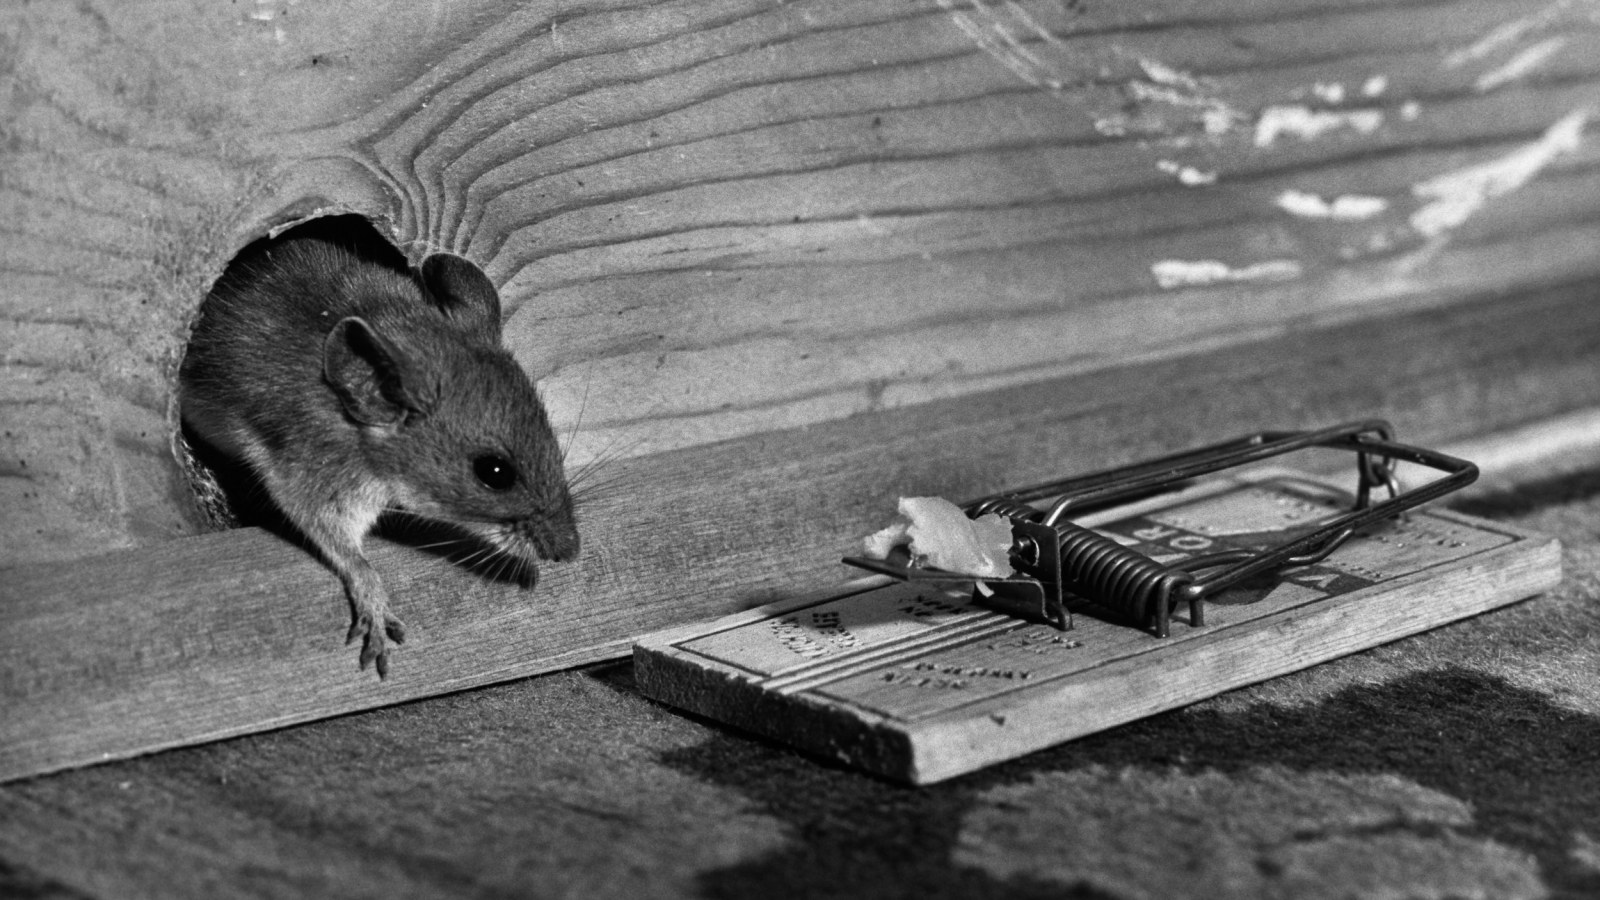 Gun-powered mousetrap - Wikipedia